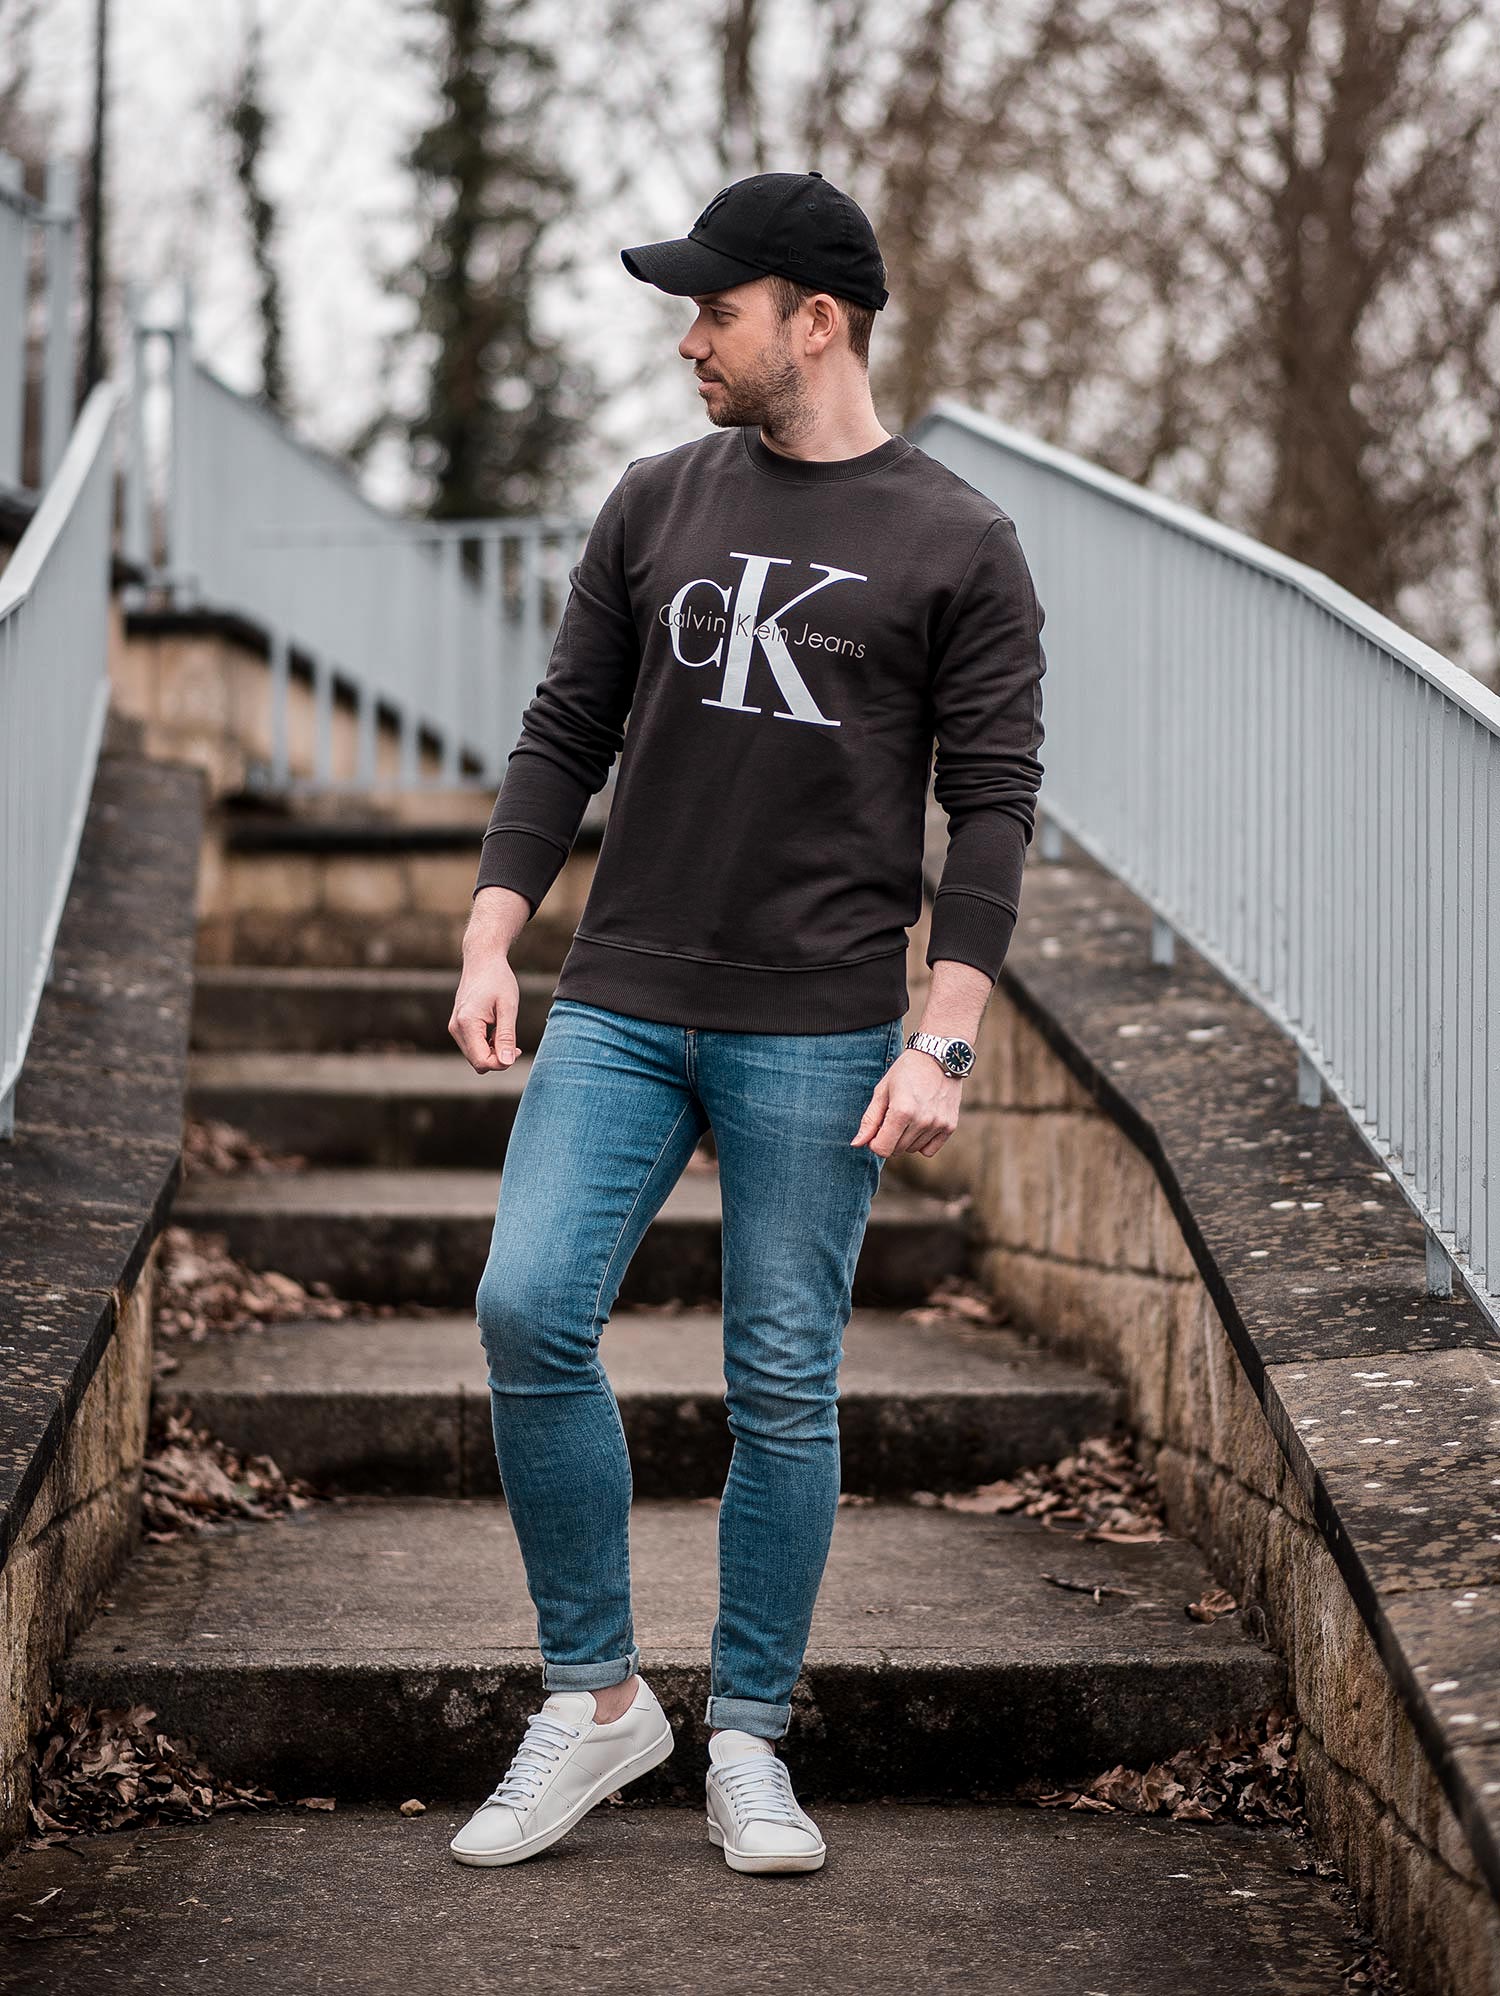 Calvin Klein Sweatshirt Outfit Throwback - Your Average Guy